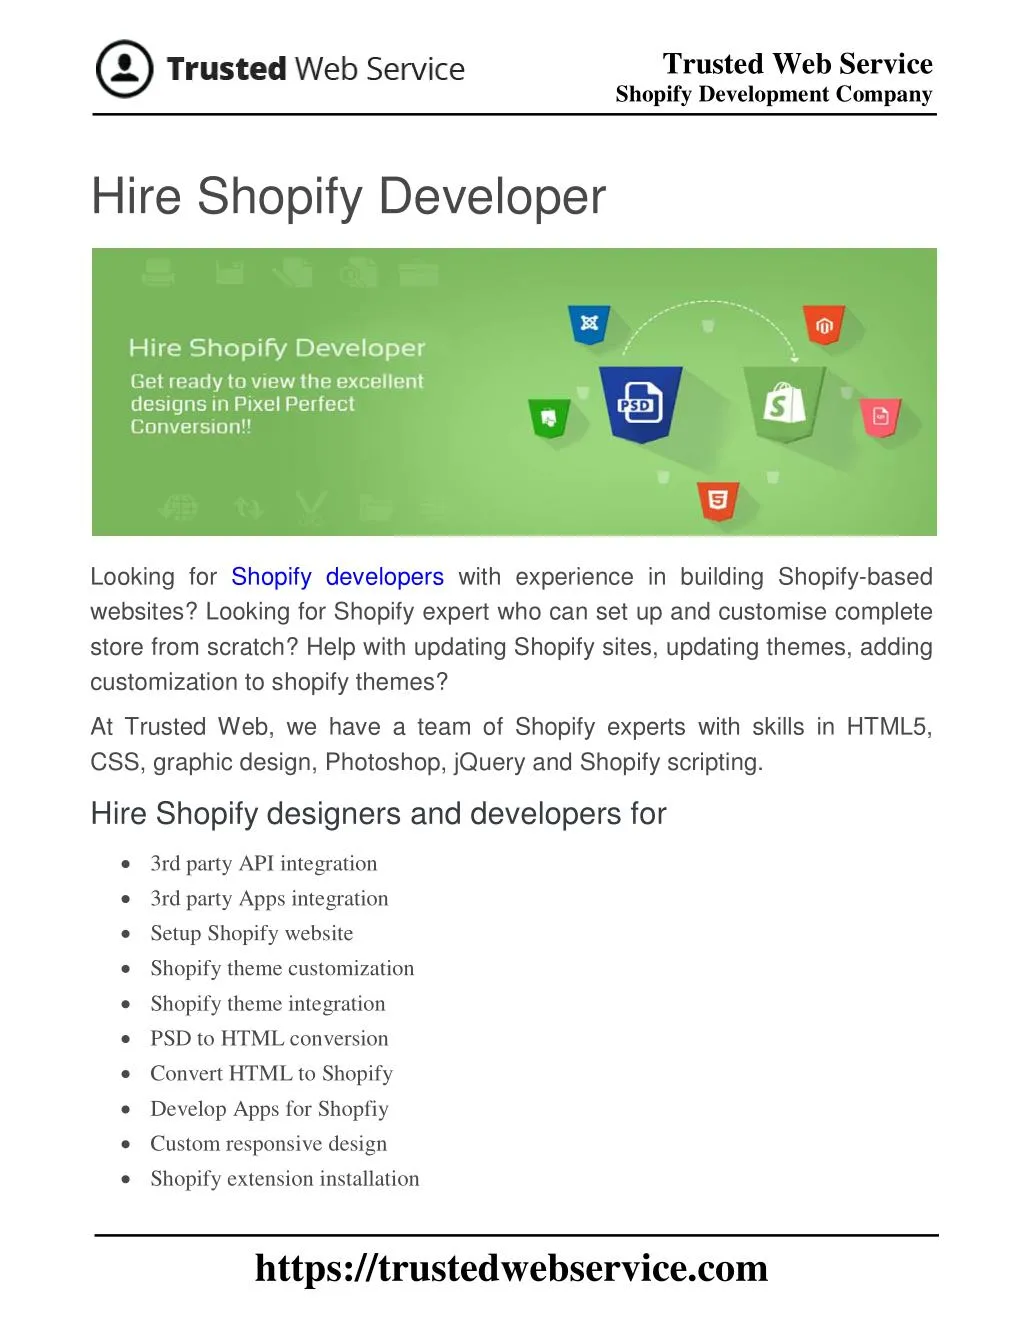 trusted web service shopify development company